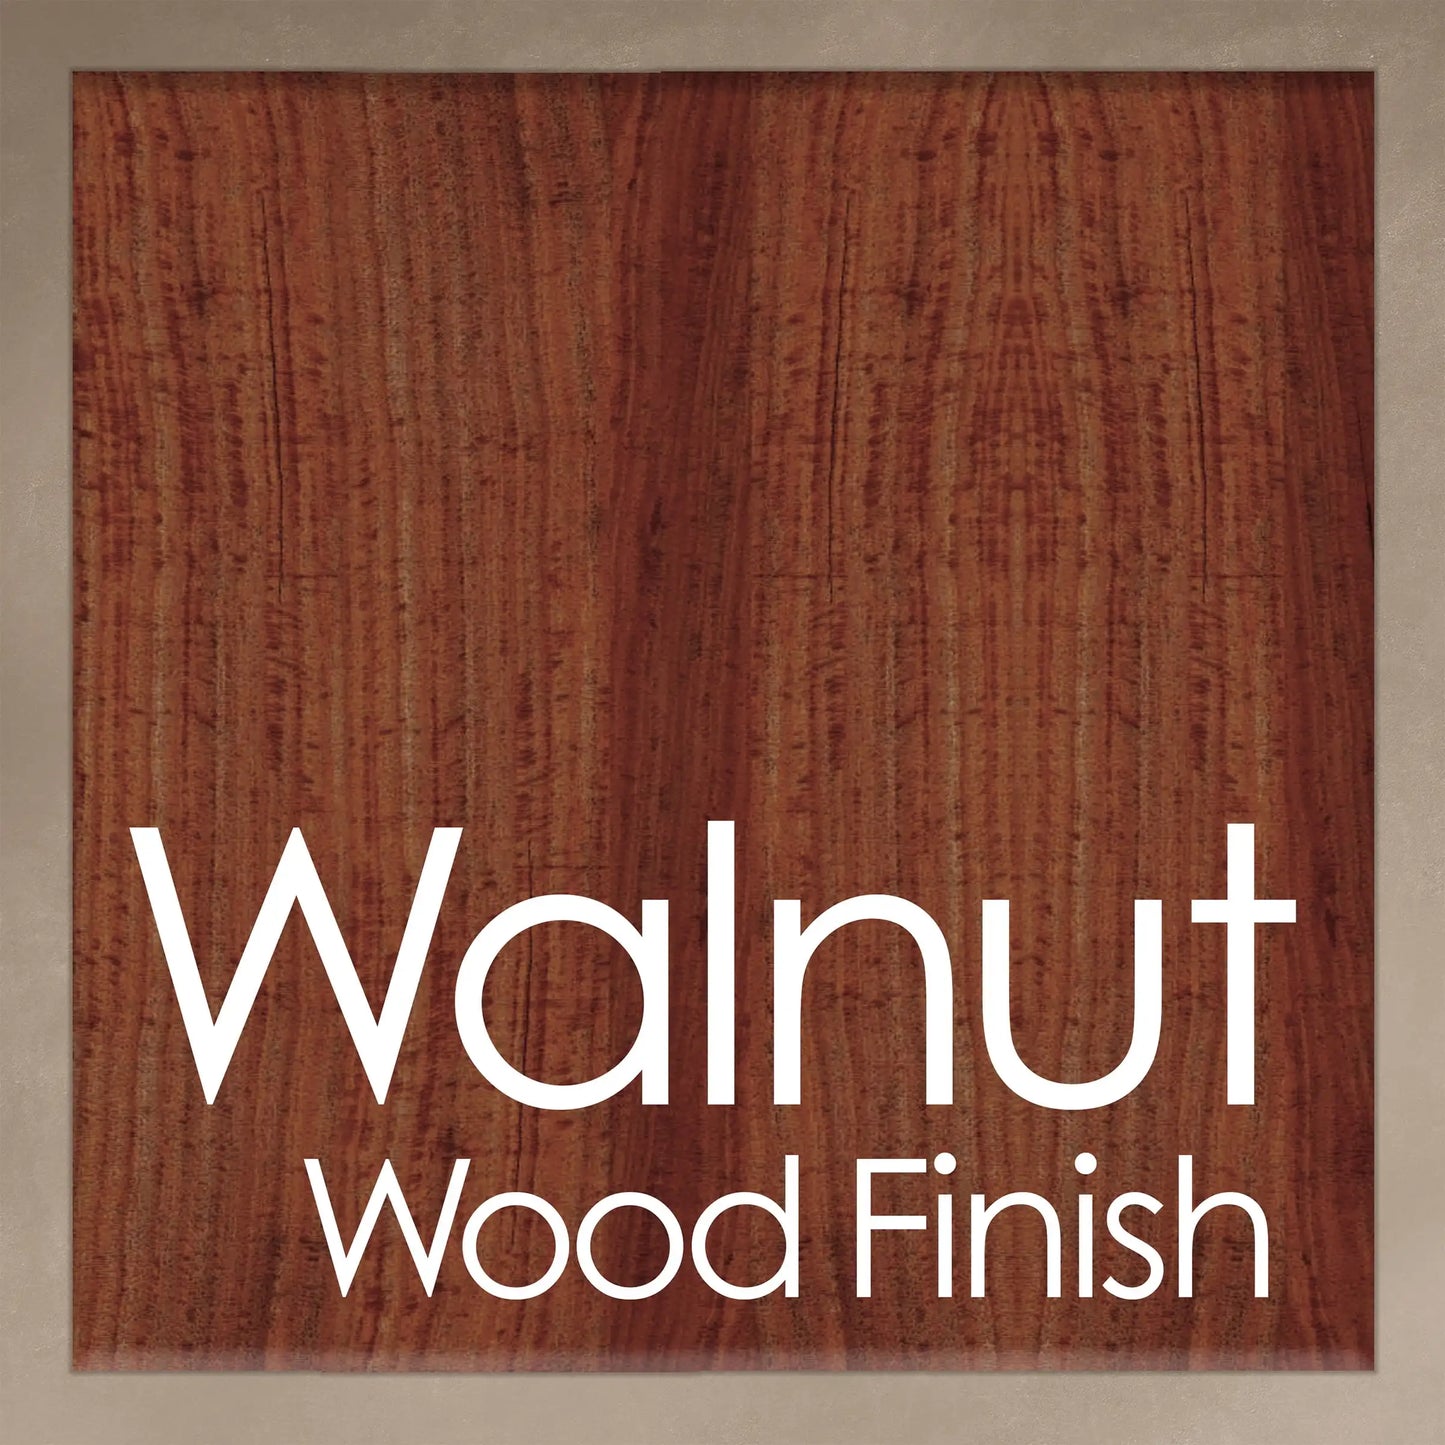 Home 5-Tier Ladder Decorative Wooden Bookshelf (Walnut)